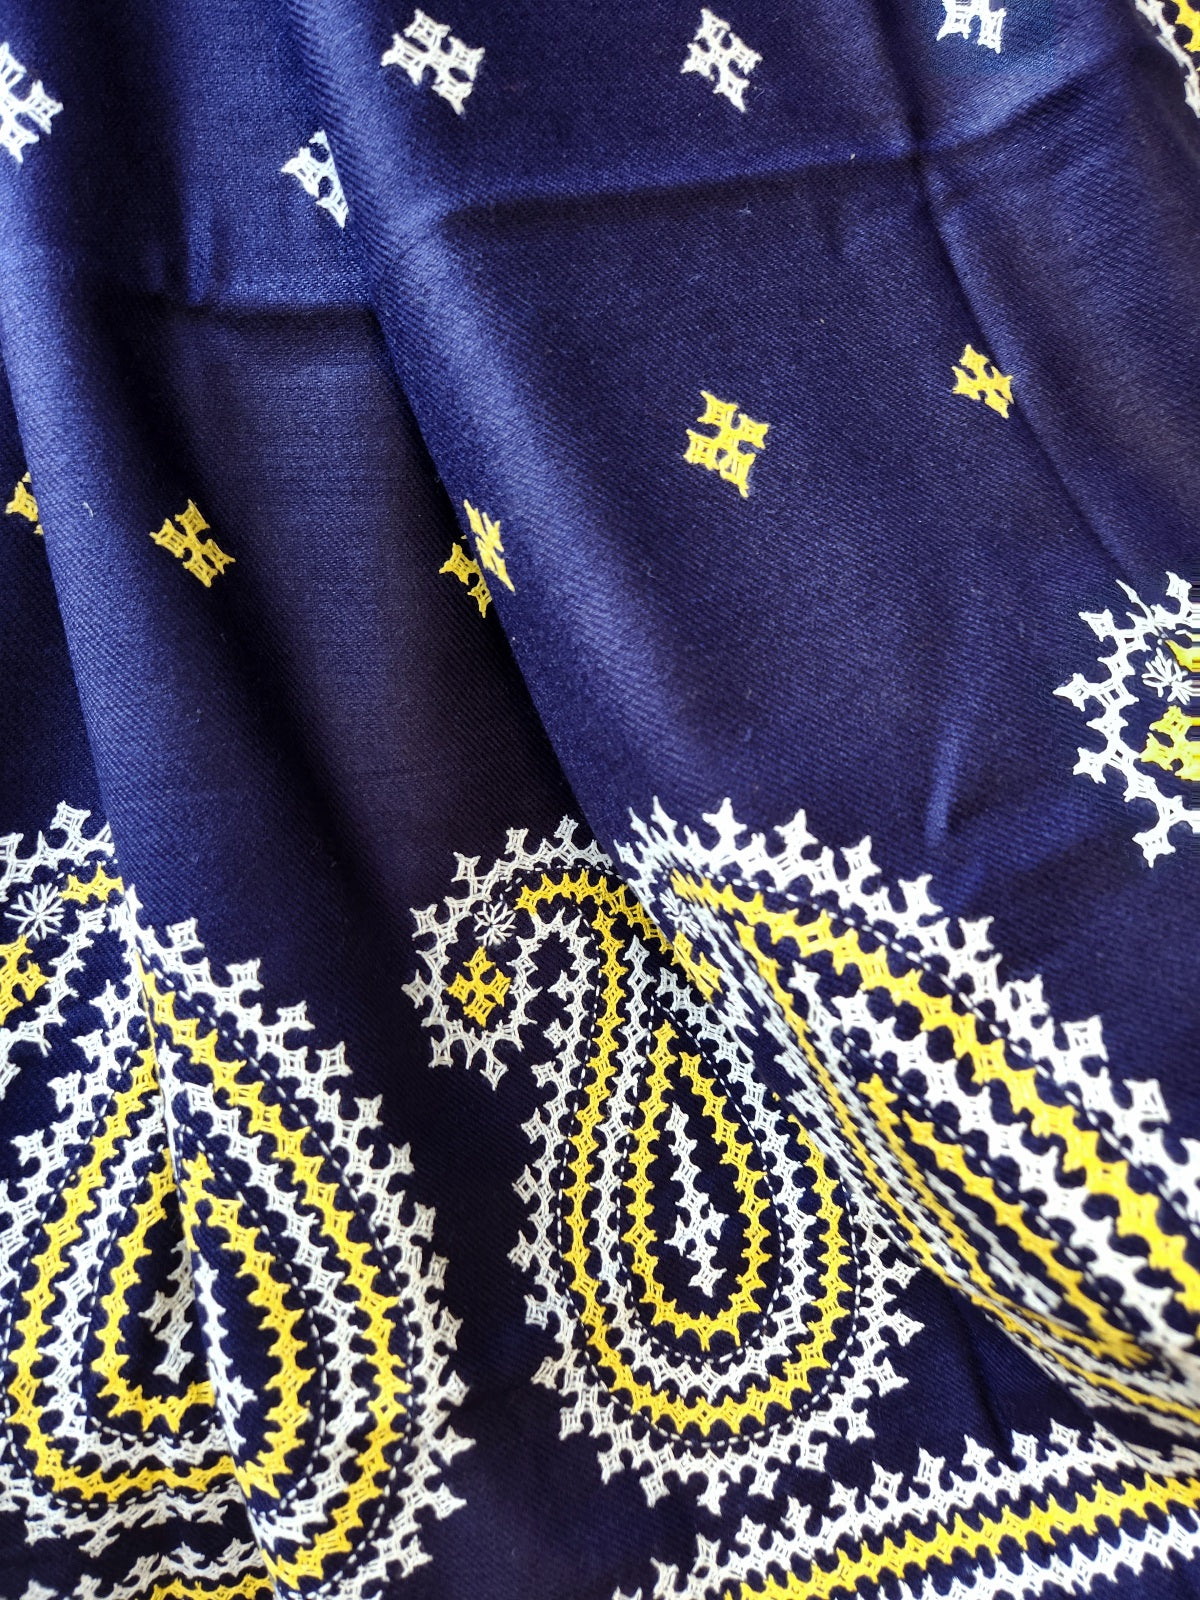 kutchwork woolen shawls handmade gifts Indian gifts handembroidery winterwear Blue wedding shopping